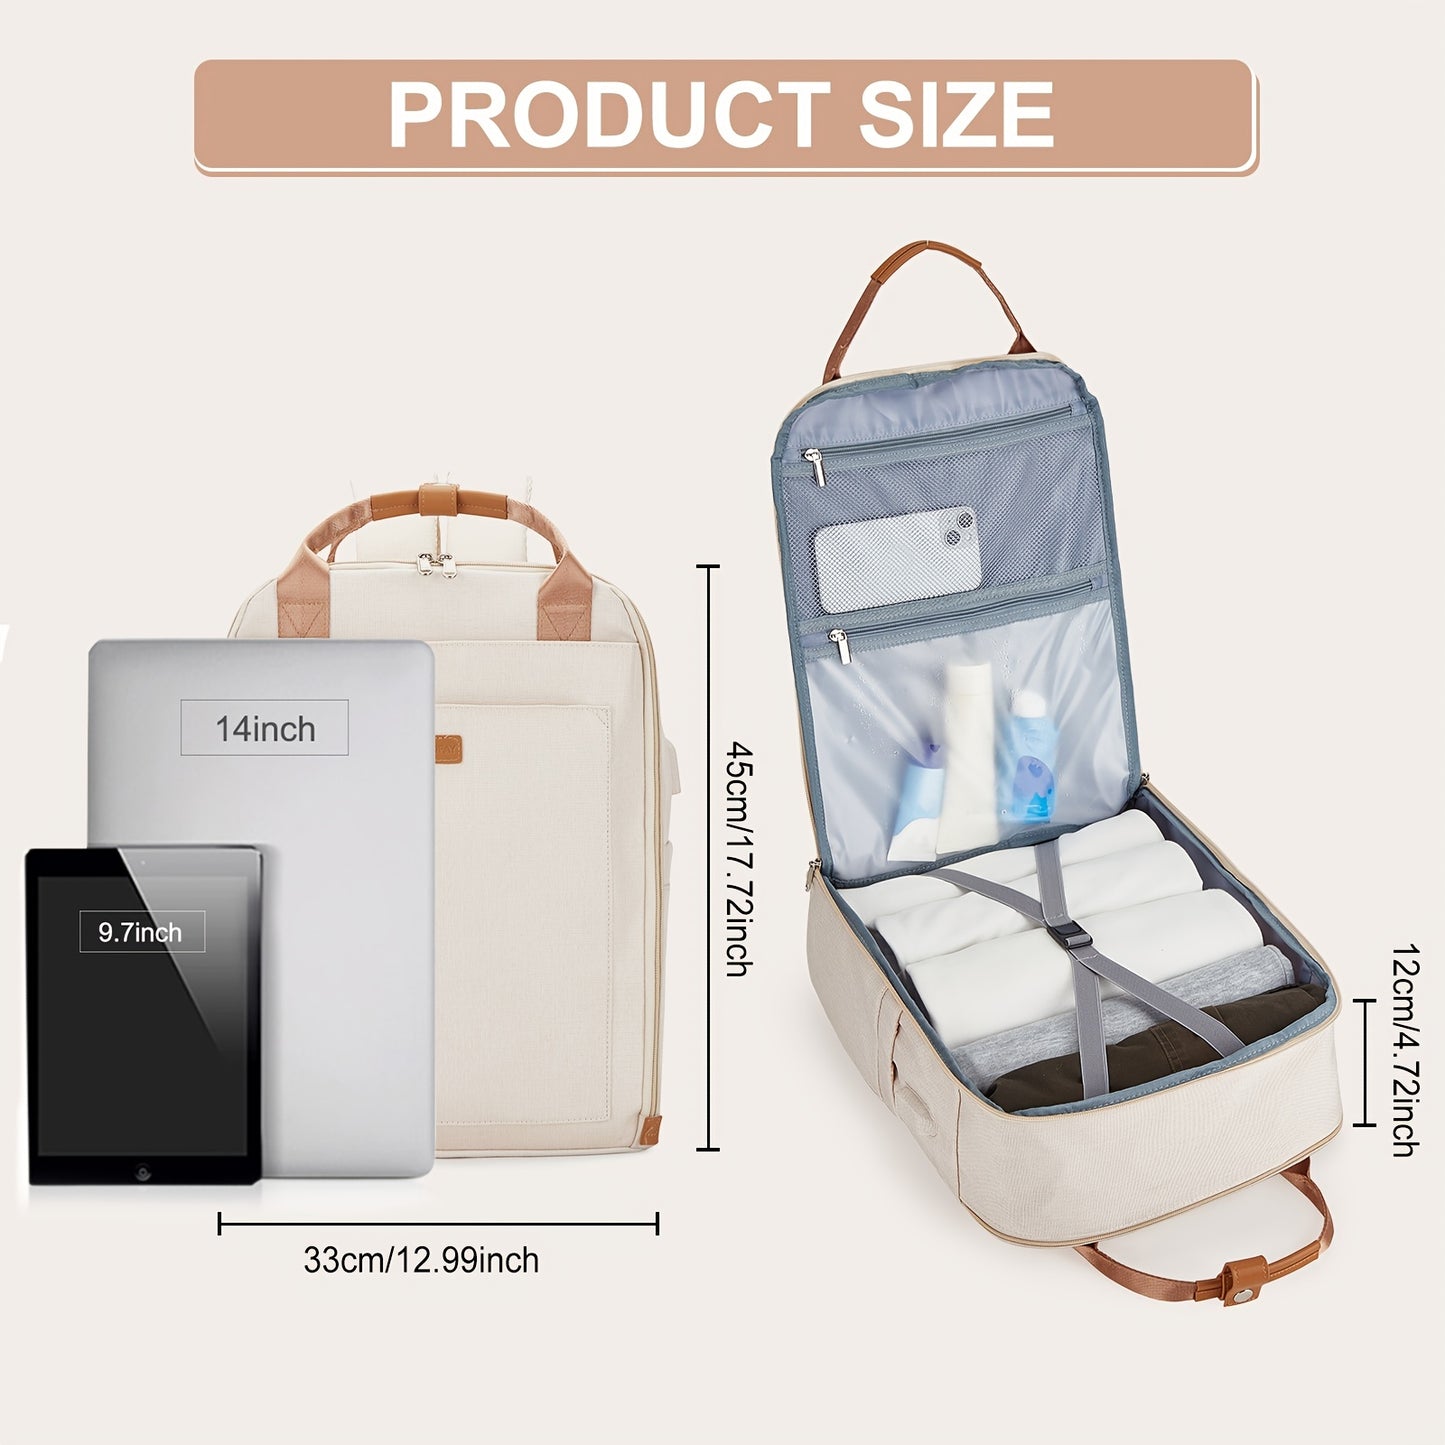 Versatile Travel Backpack, Solid Color Large Capacity Backpack, Fashion Trend Computer Bag Business Luggage Bag